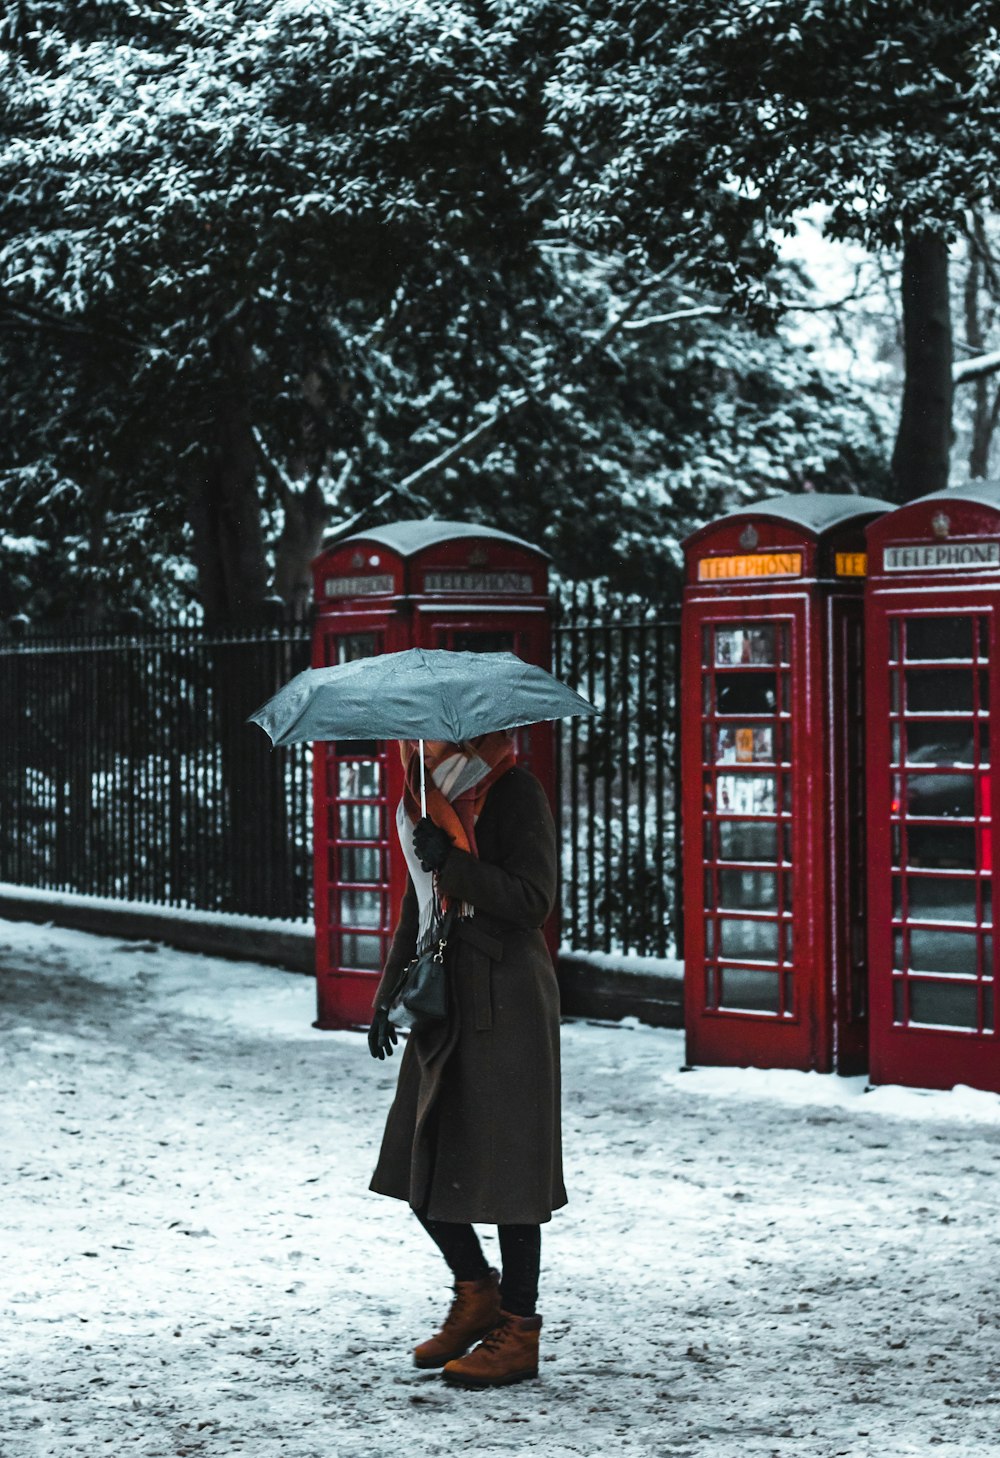 Mulher sob o guarda-chuva perto da cabine telefônica